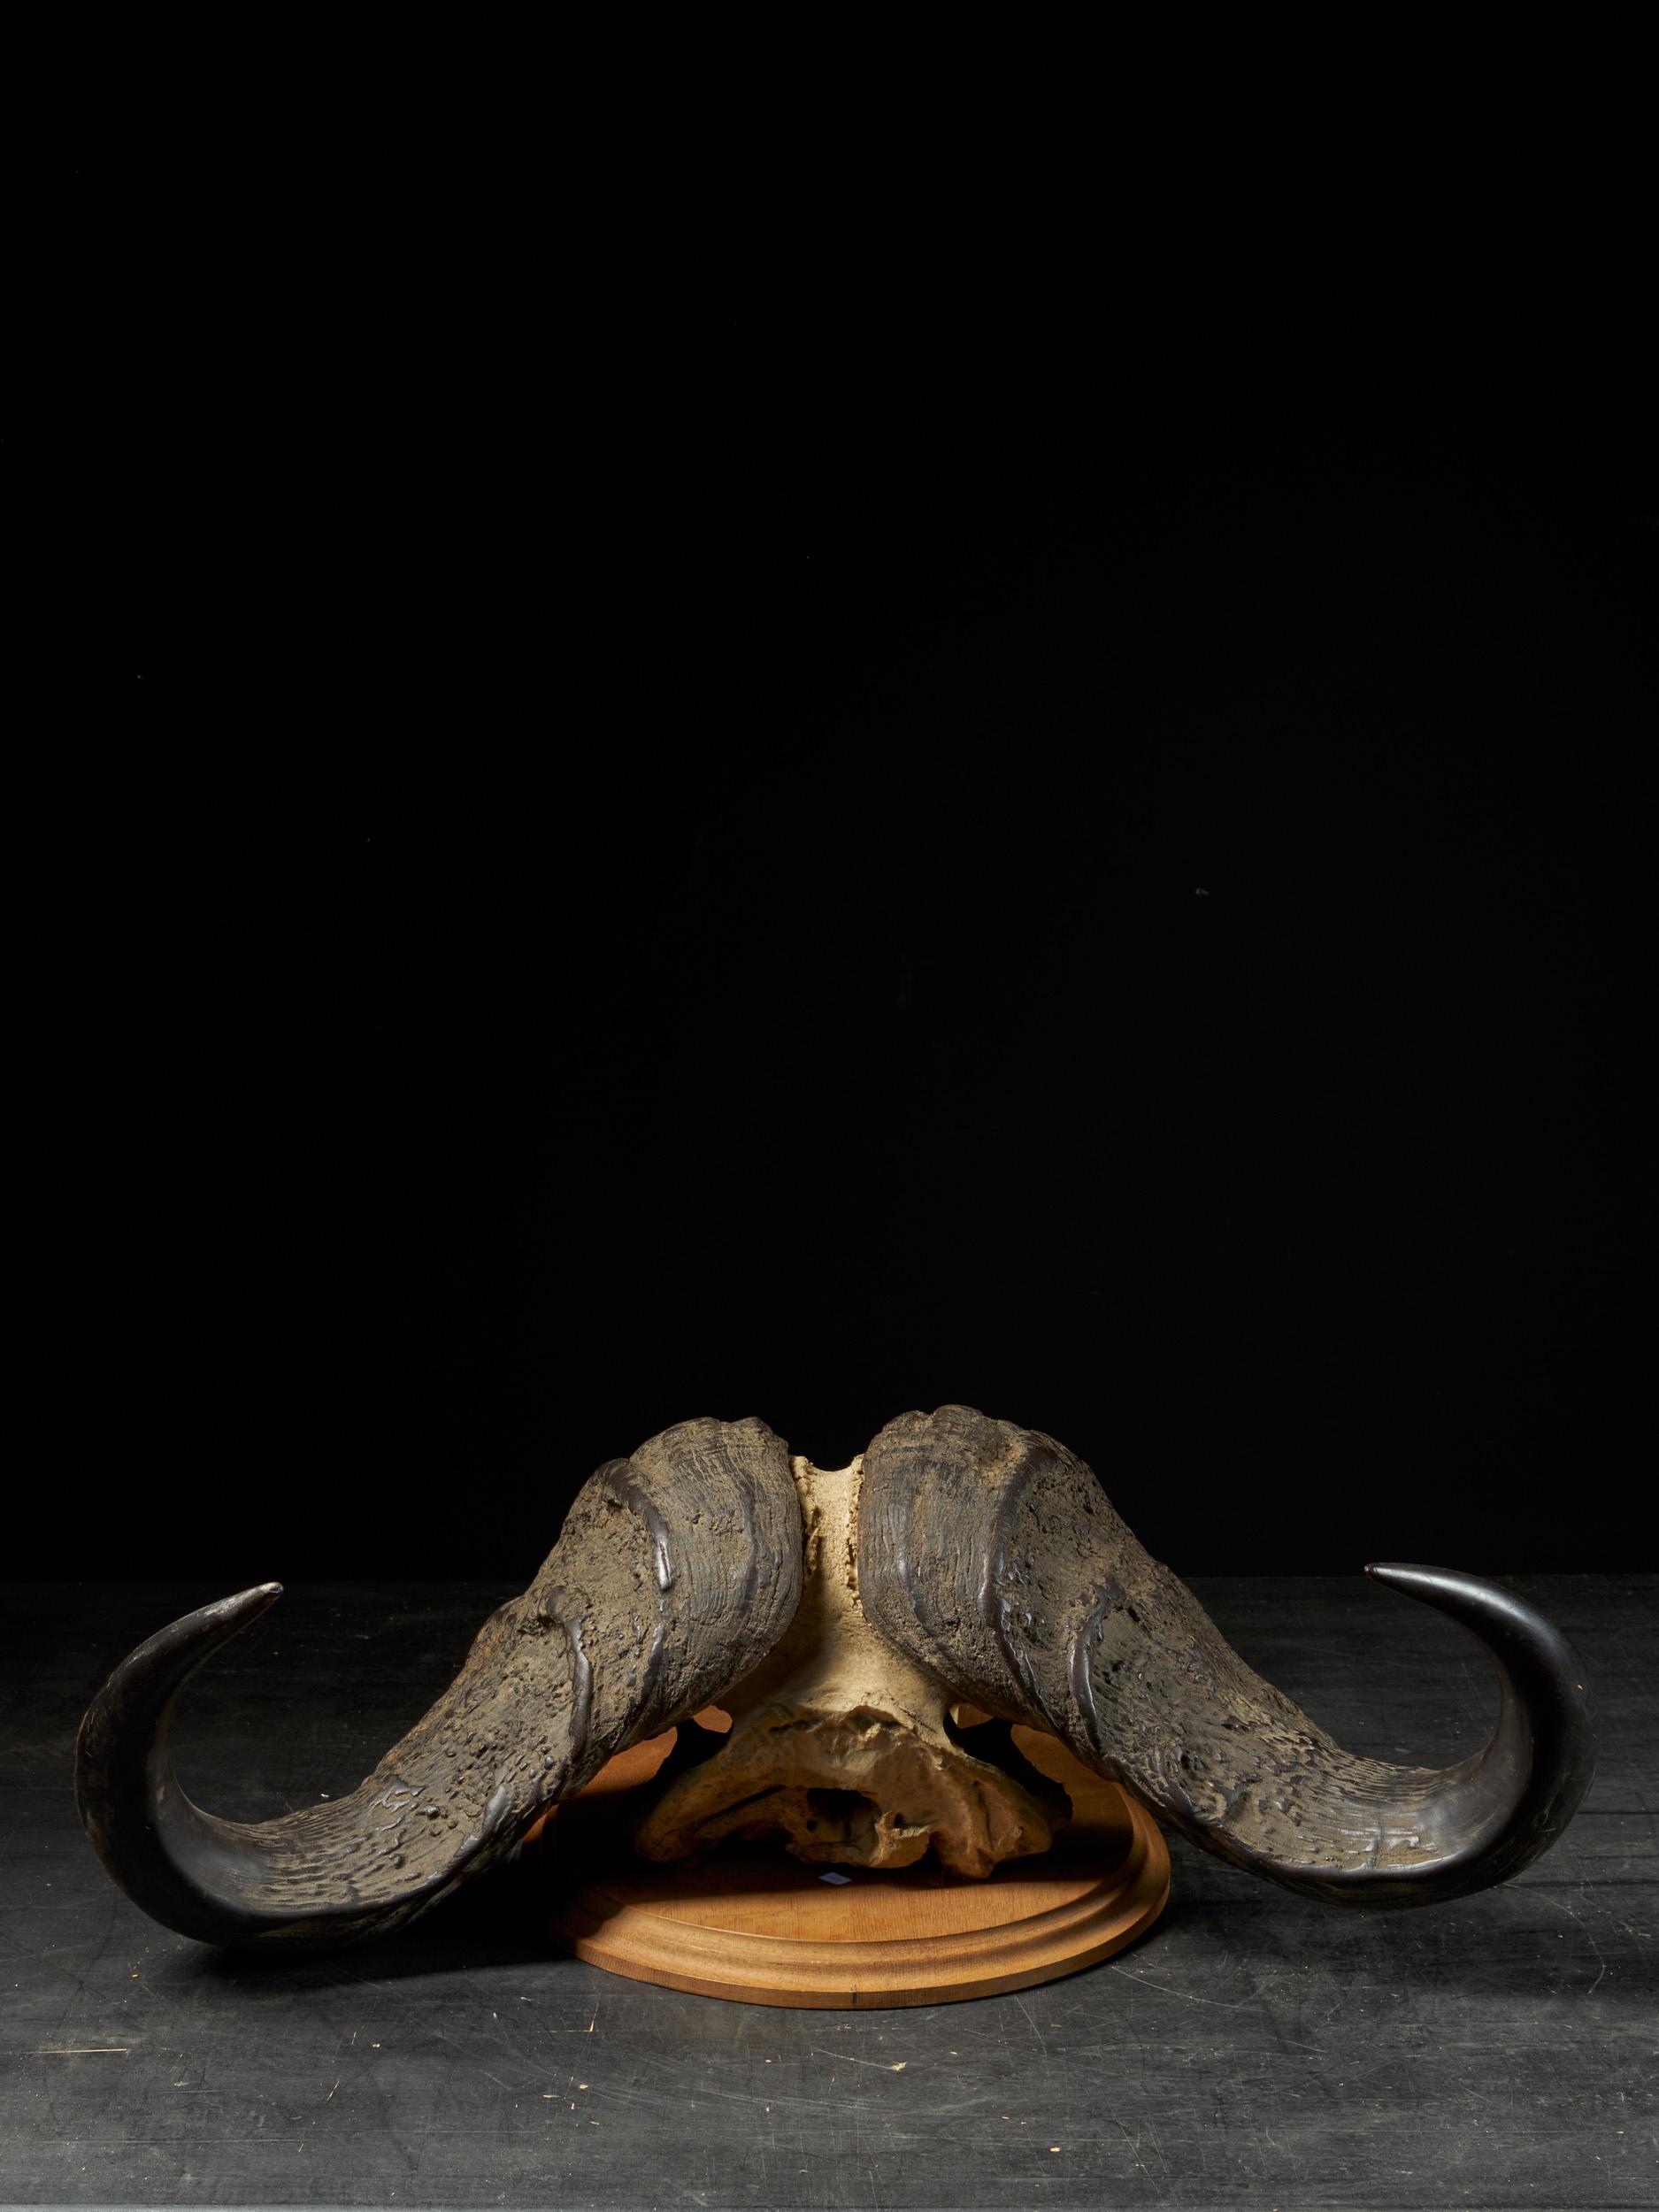 cape buffalo horns